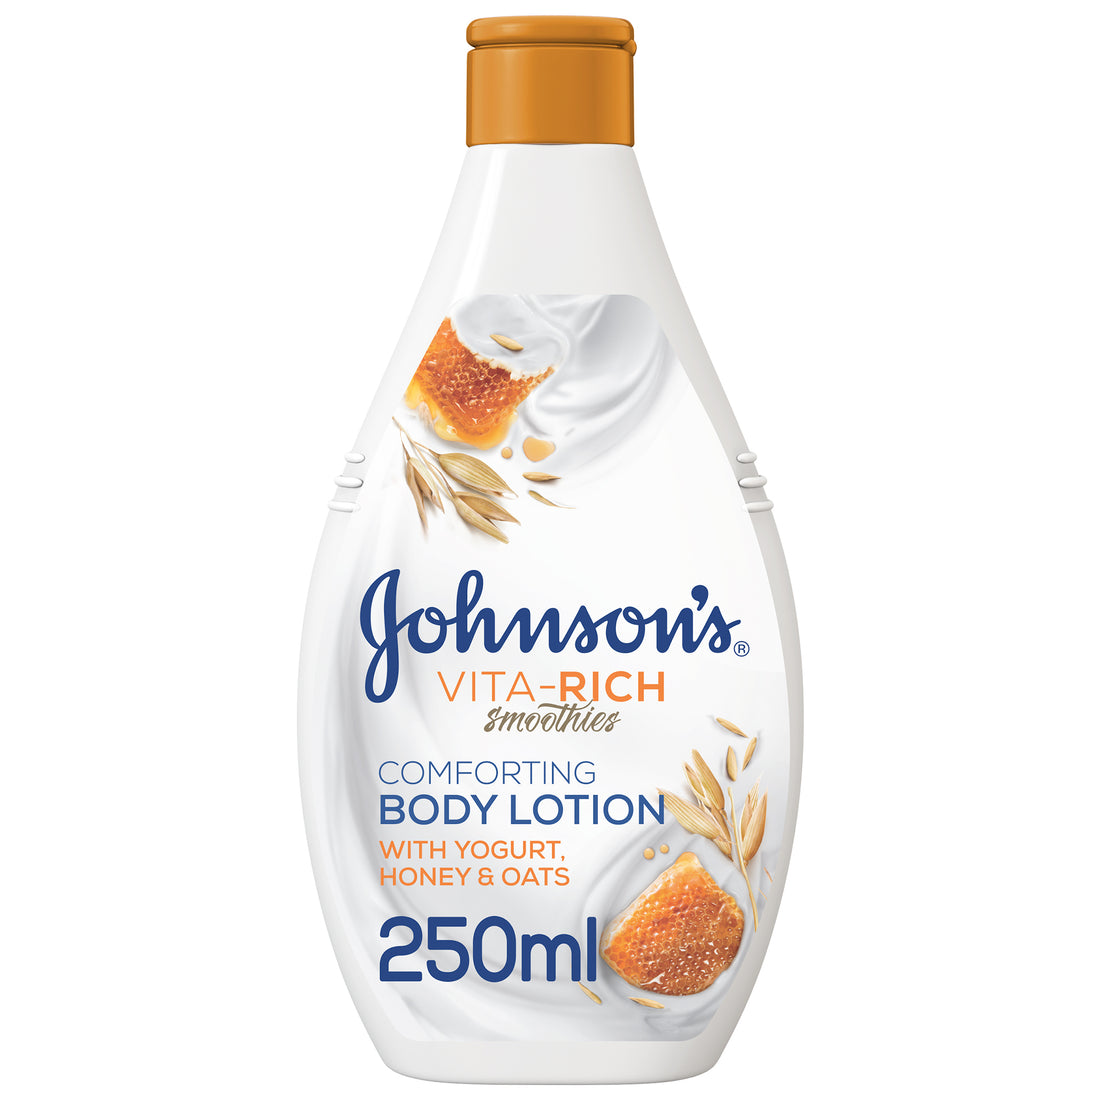 JOHNSON’S Body Lotion - Vita-Rich, Smoothies, Comforting, Yogurt, Honey &amp; Oats, 250ml